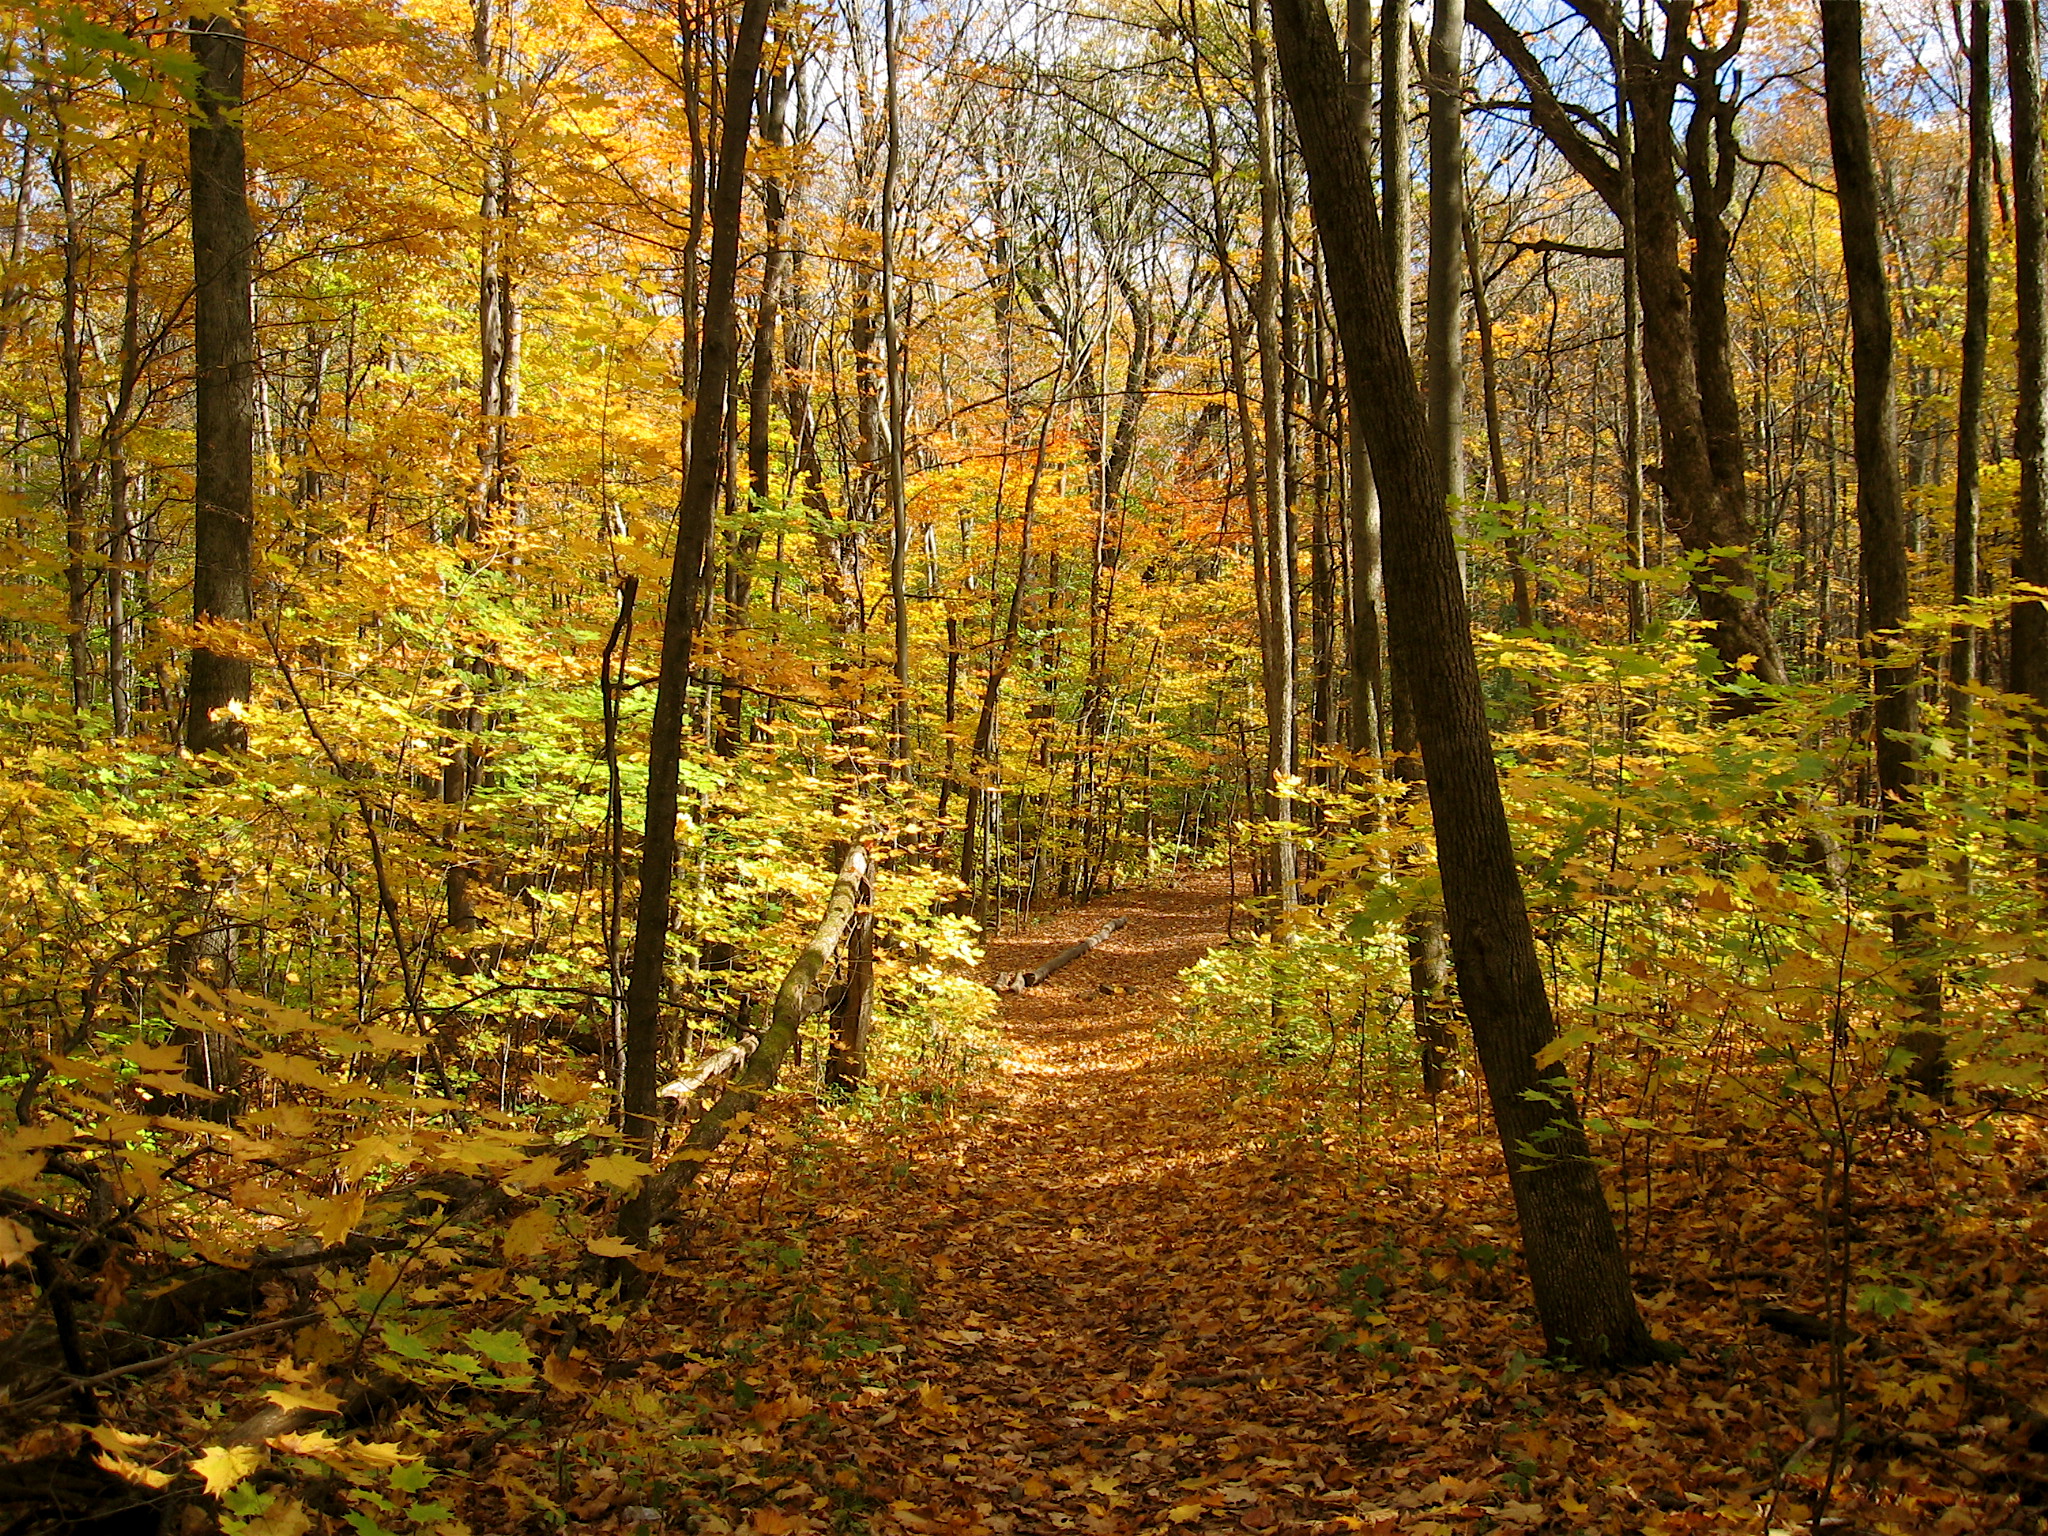 Woods Wanderer » Autumn Walk